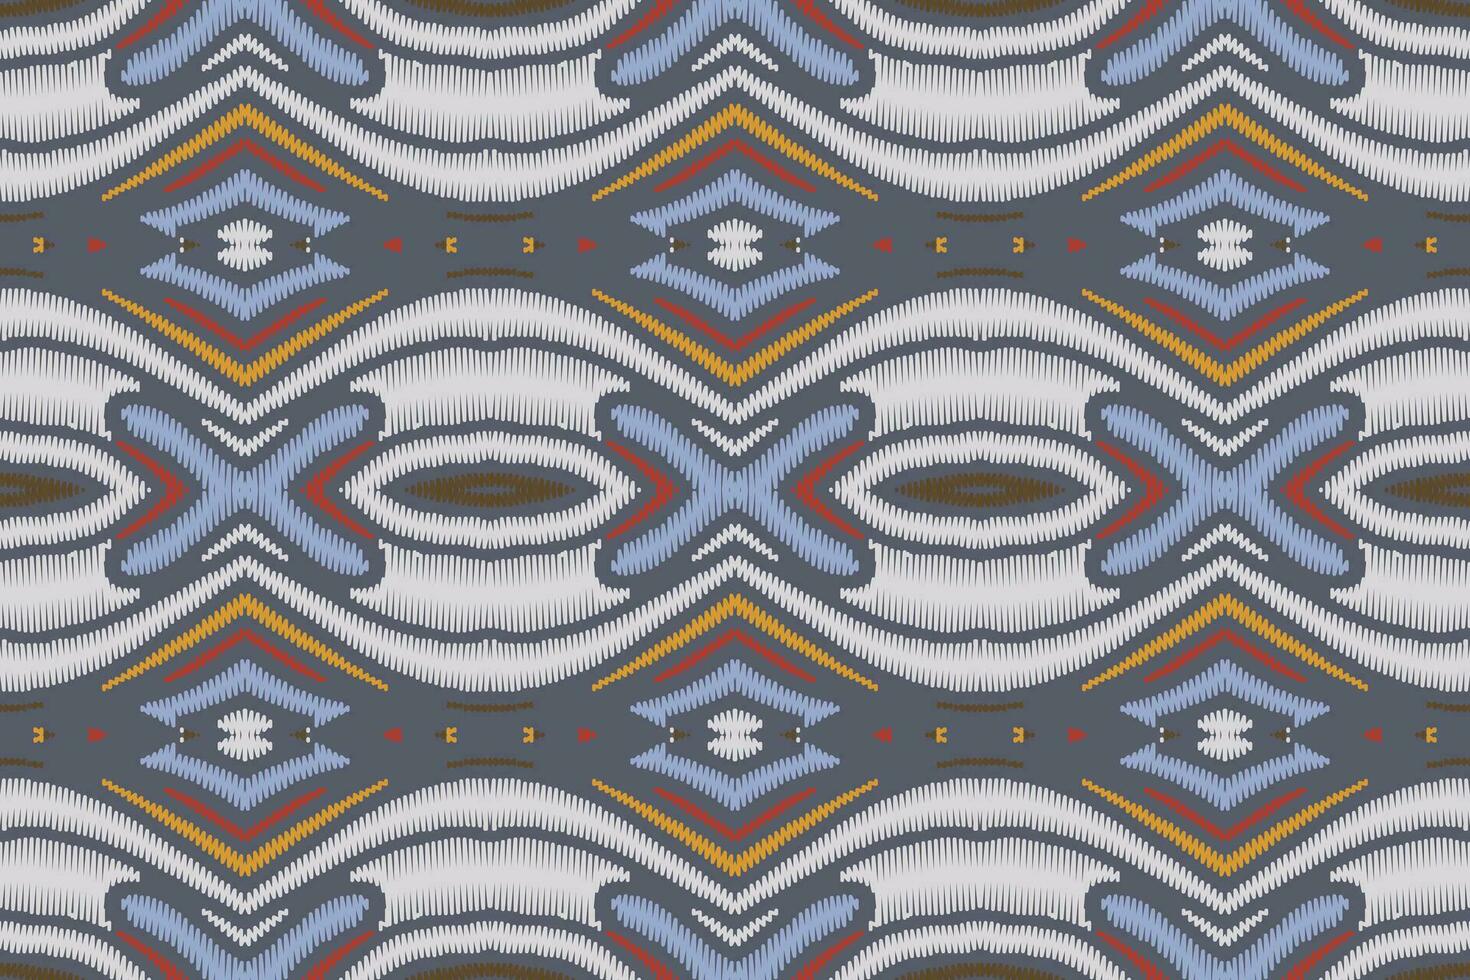 ikat damasco cachemir bordado antecedentes. ikat patrones geométrico étnico oriental modelo tradicional. ikat azteca estilo resumen diseño para impresión textura,tela,sari,sari,alfombra. vector